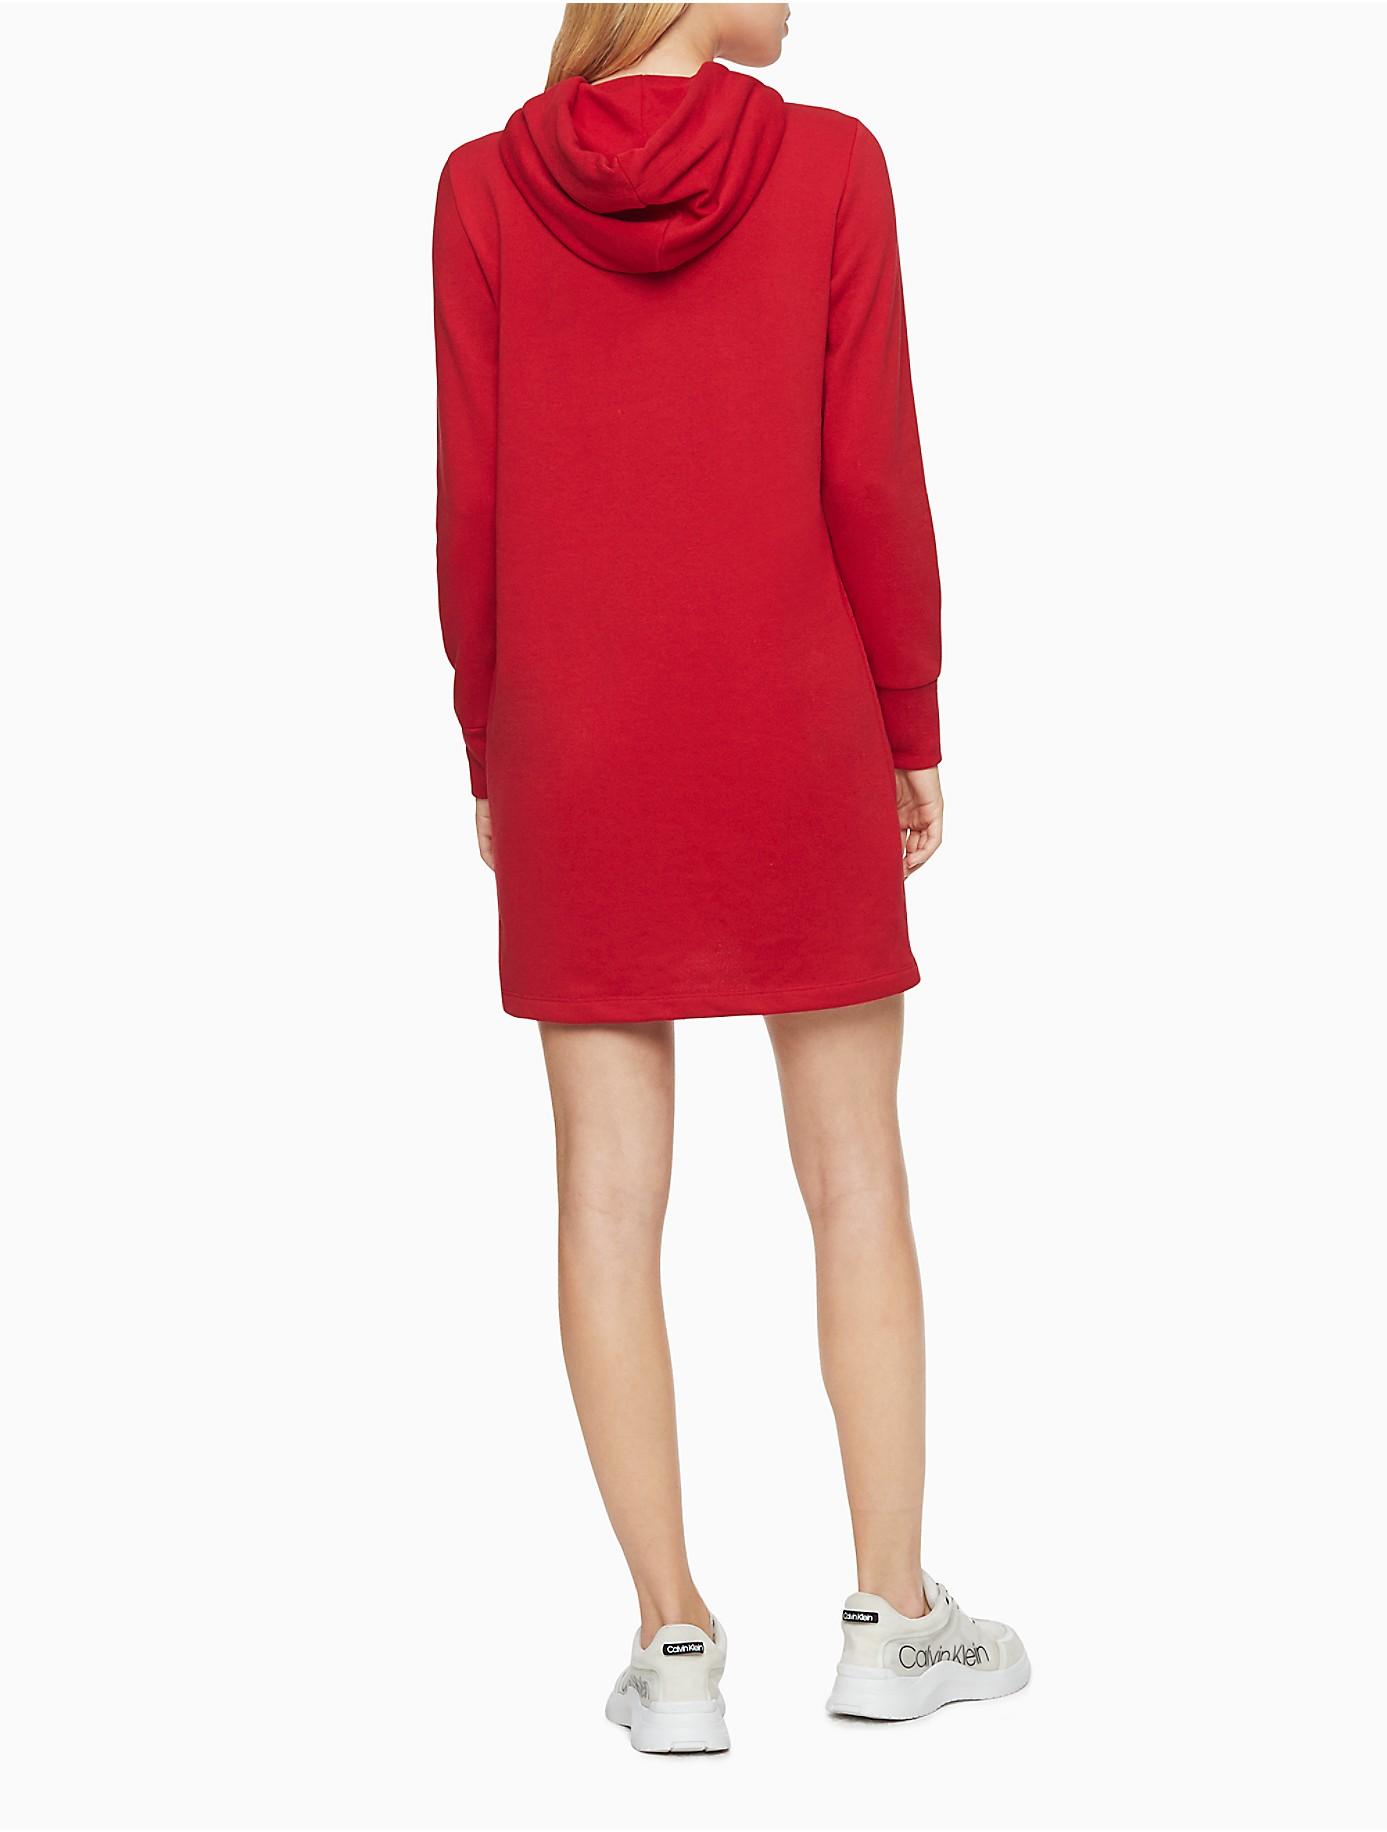 Calvin Klein Cotton Embossed Logo Hooded Sweatshirt Dress in Red - Lyst